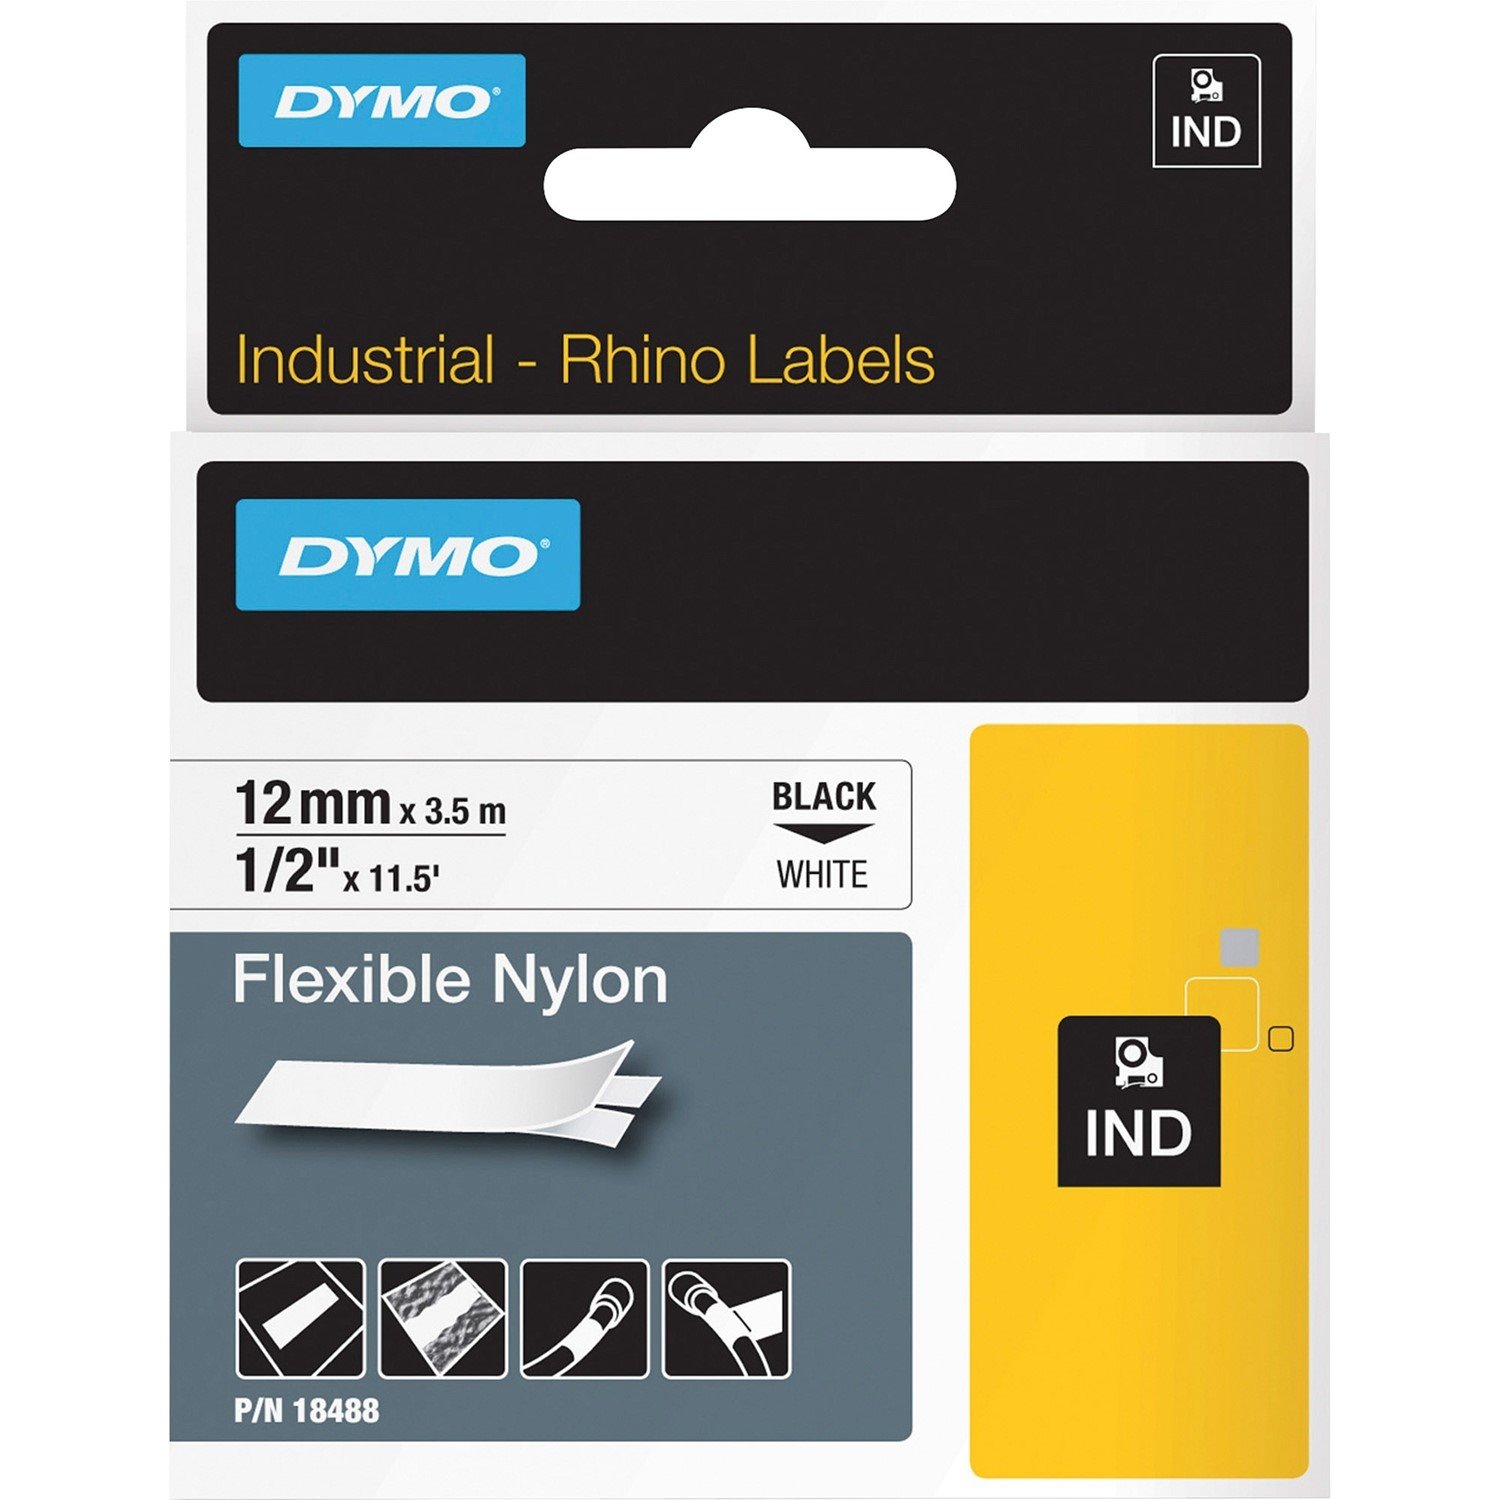 Dymo Rhino 1/2In X 11.5FT, White Flexible Nylon Labels